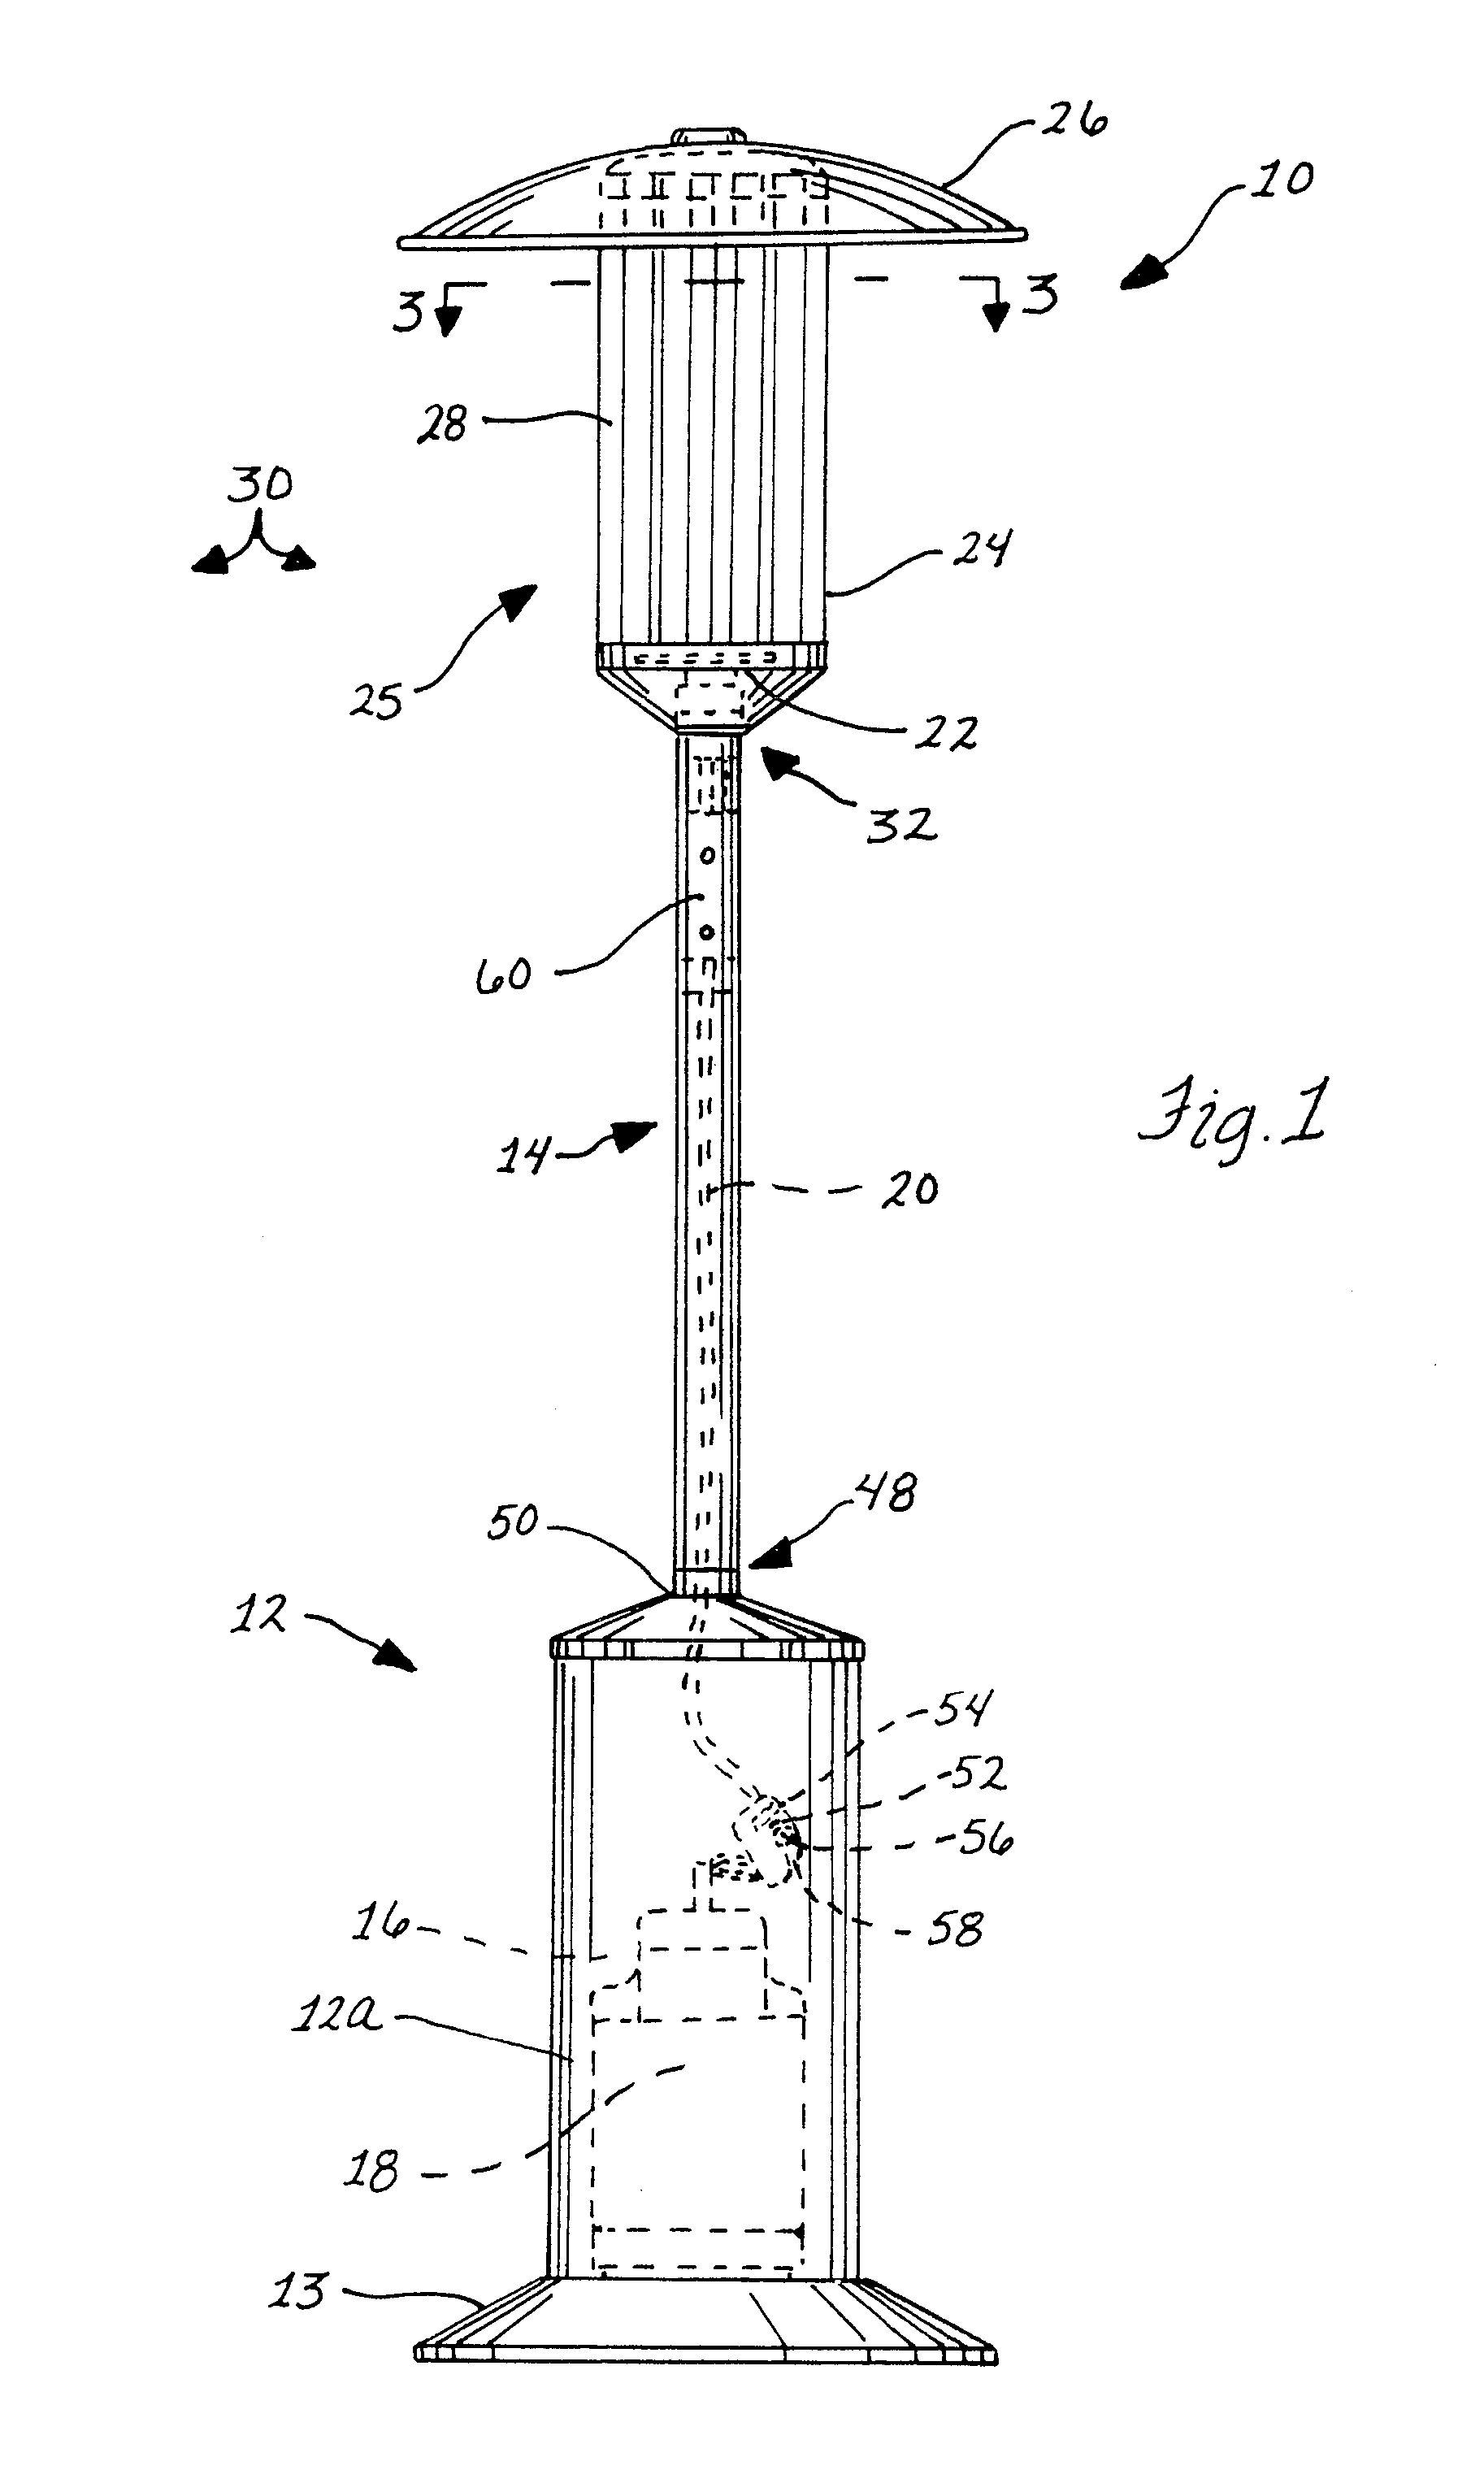 Heating apparatus